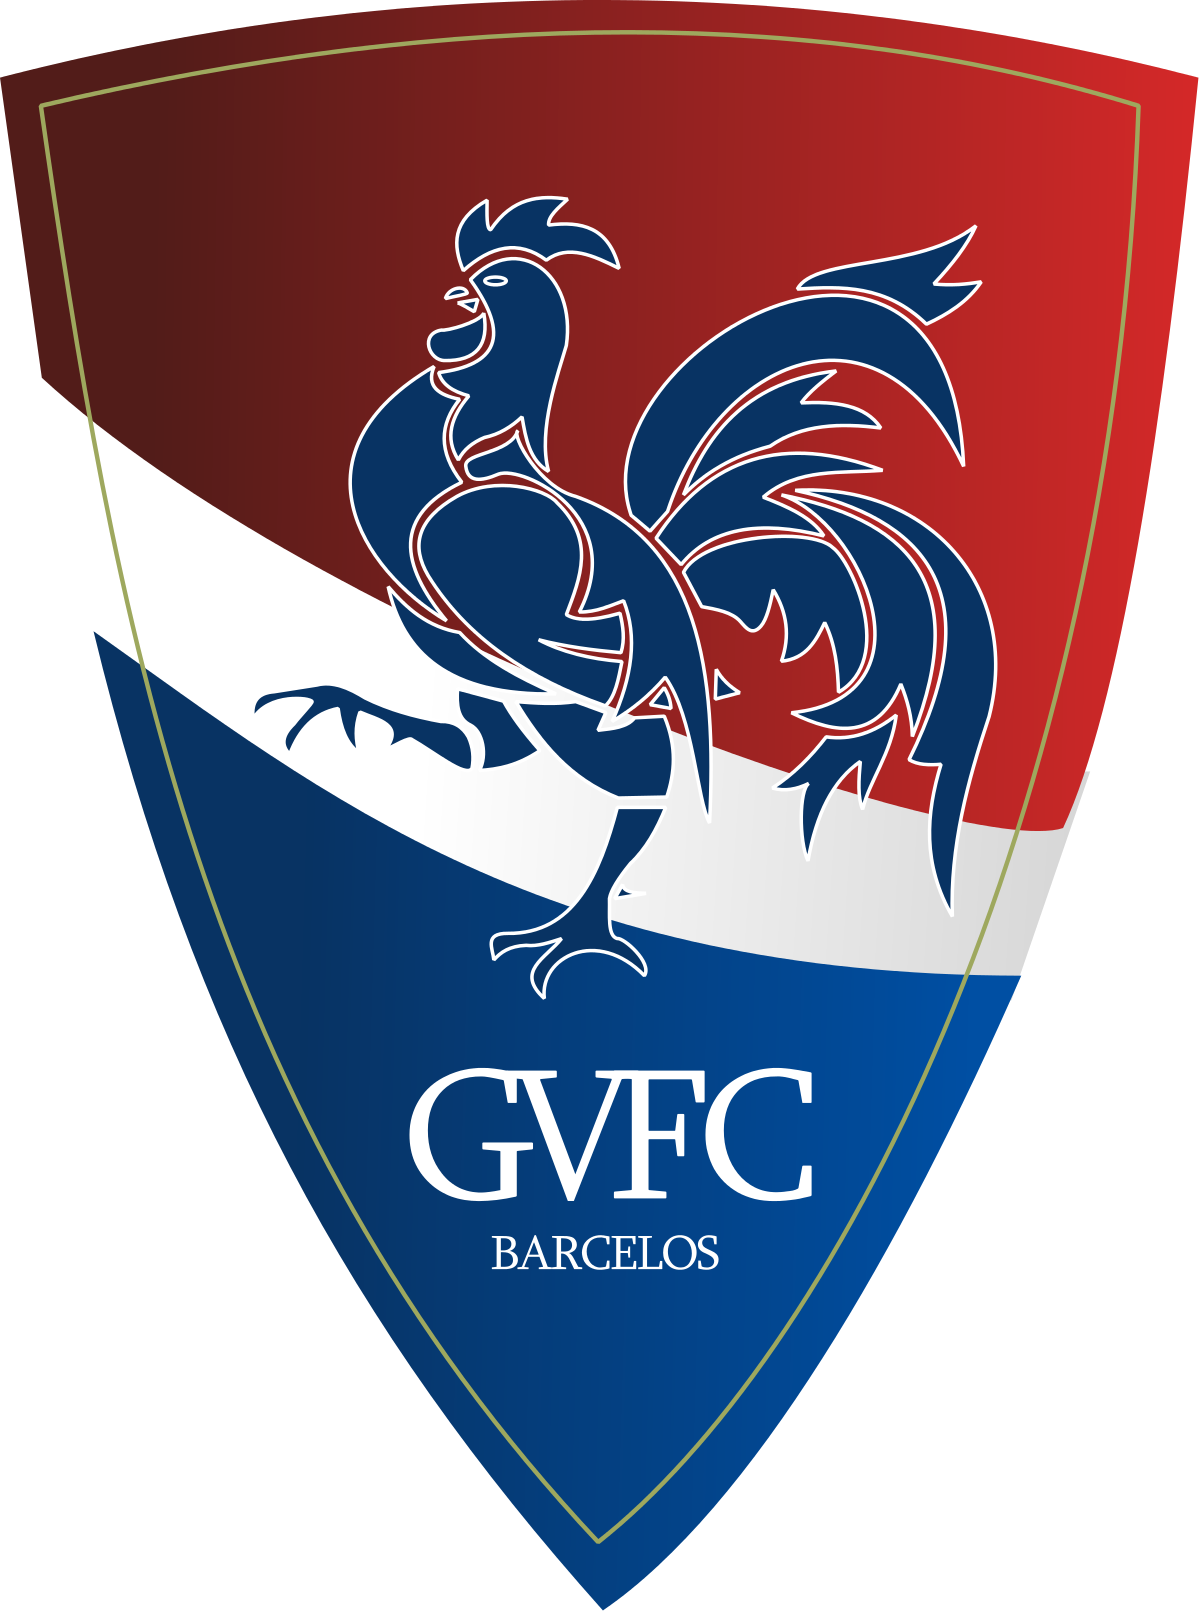 Gil Vicente FC vs Paços de Ferreira Prediction: Main events to take place after break